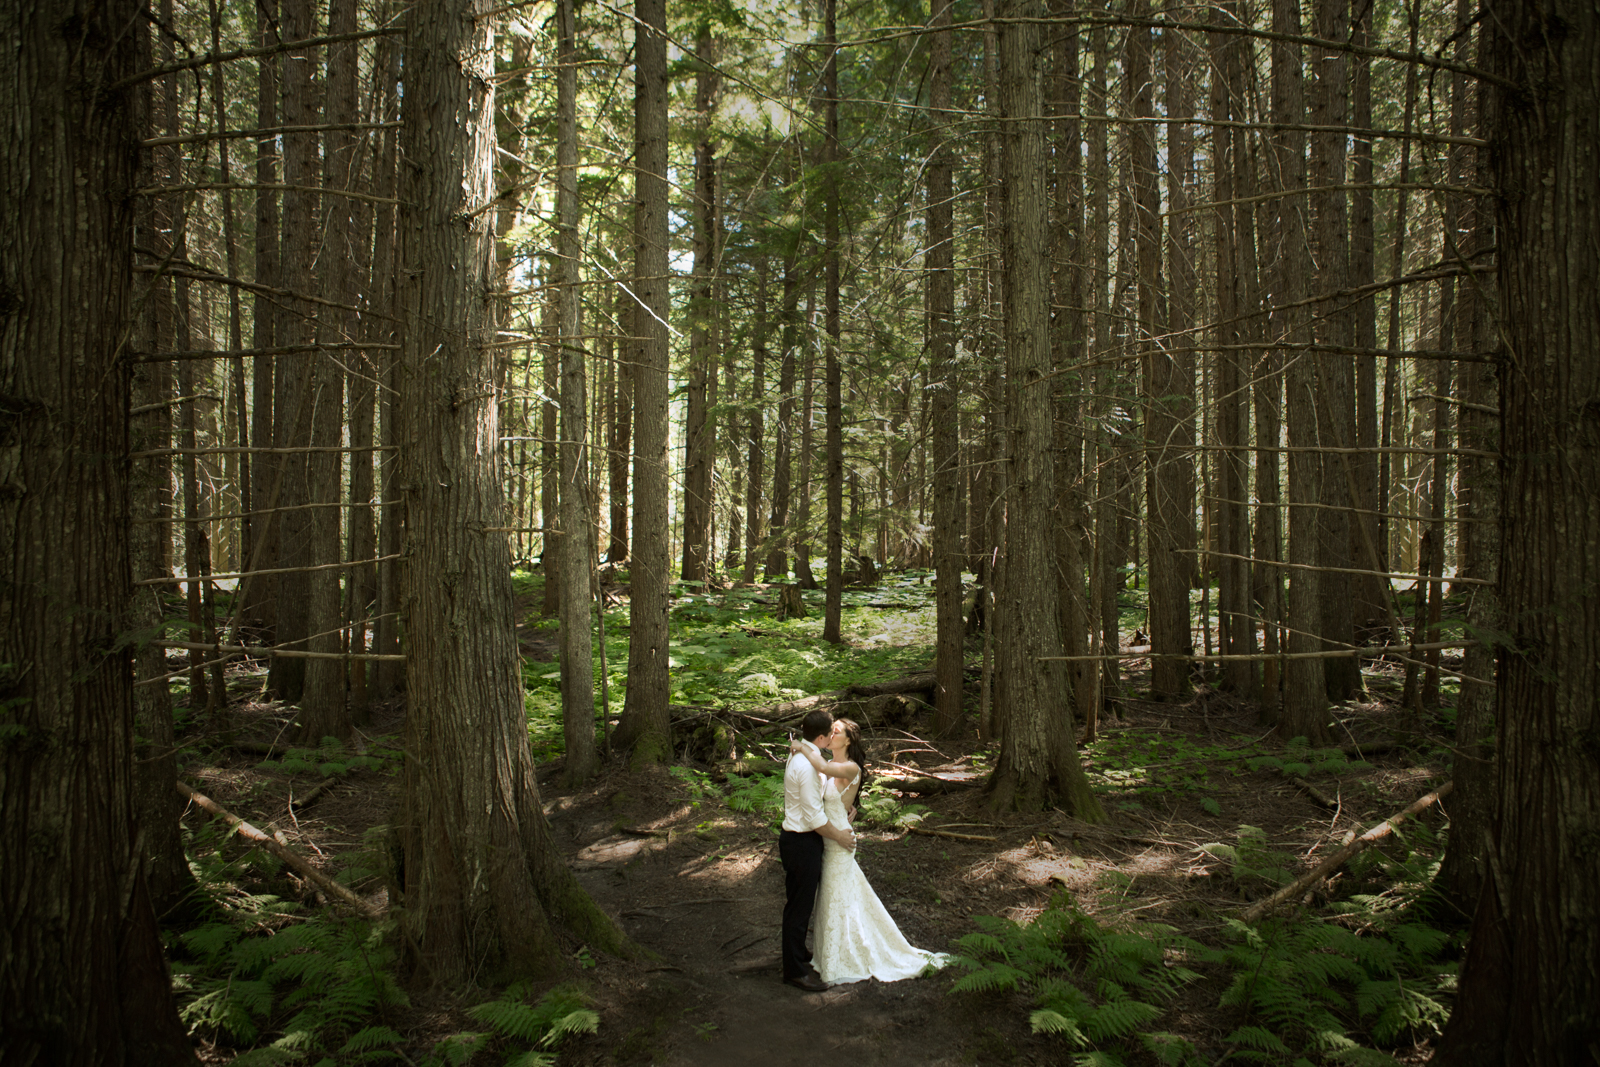 54Andrew_Pavlidis_Photography_Jess_and_Tristan_Revelstoke_Elopement_Calgary_Wedding_Photographer-